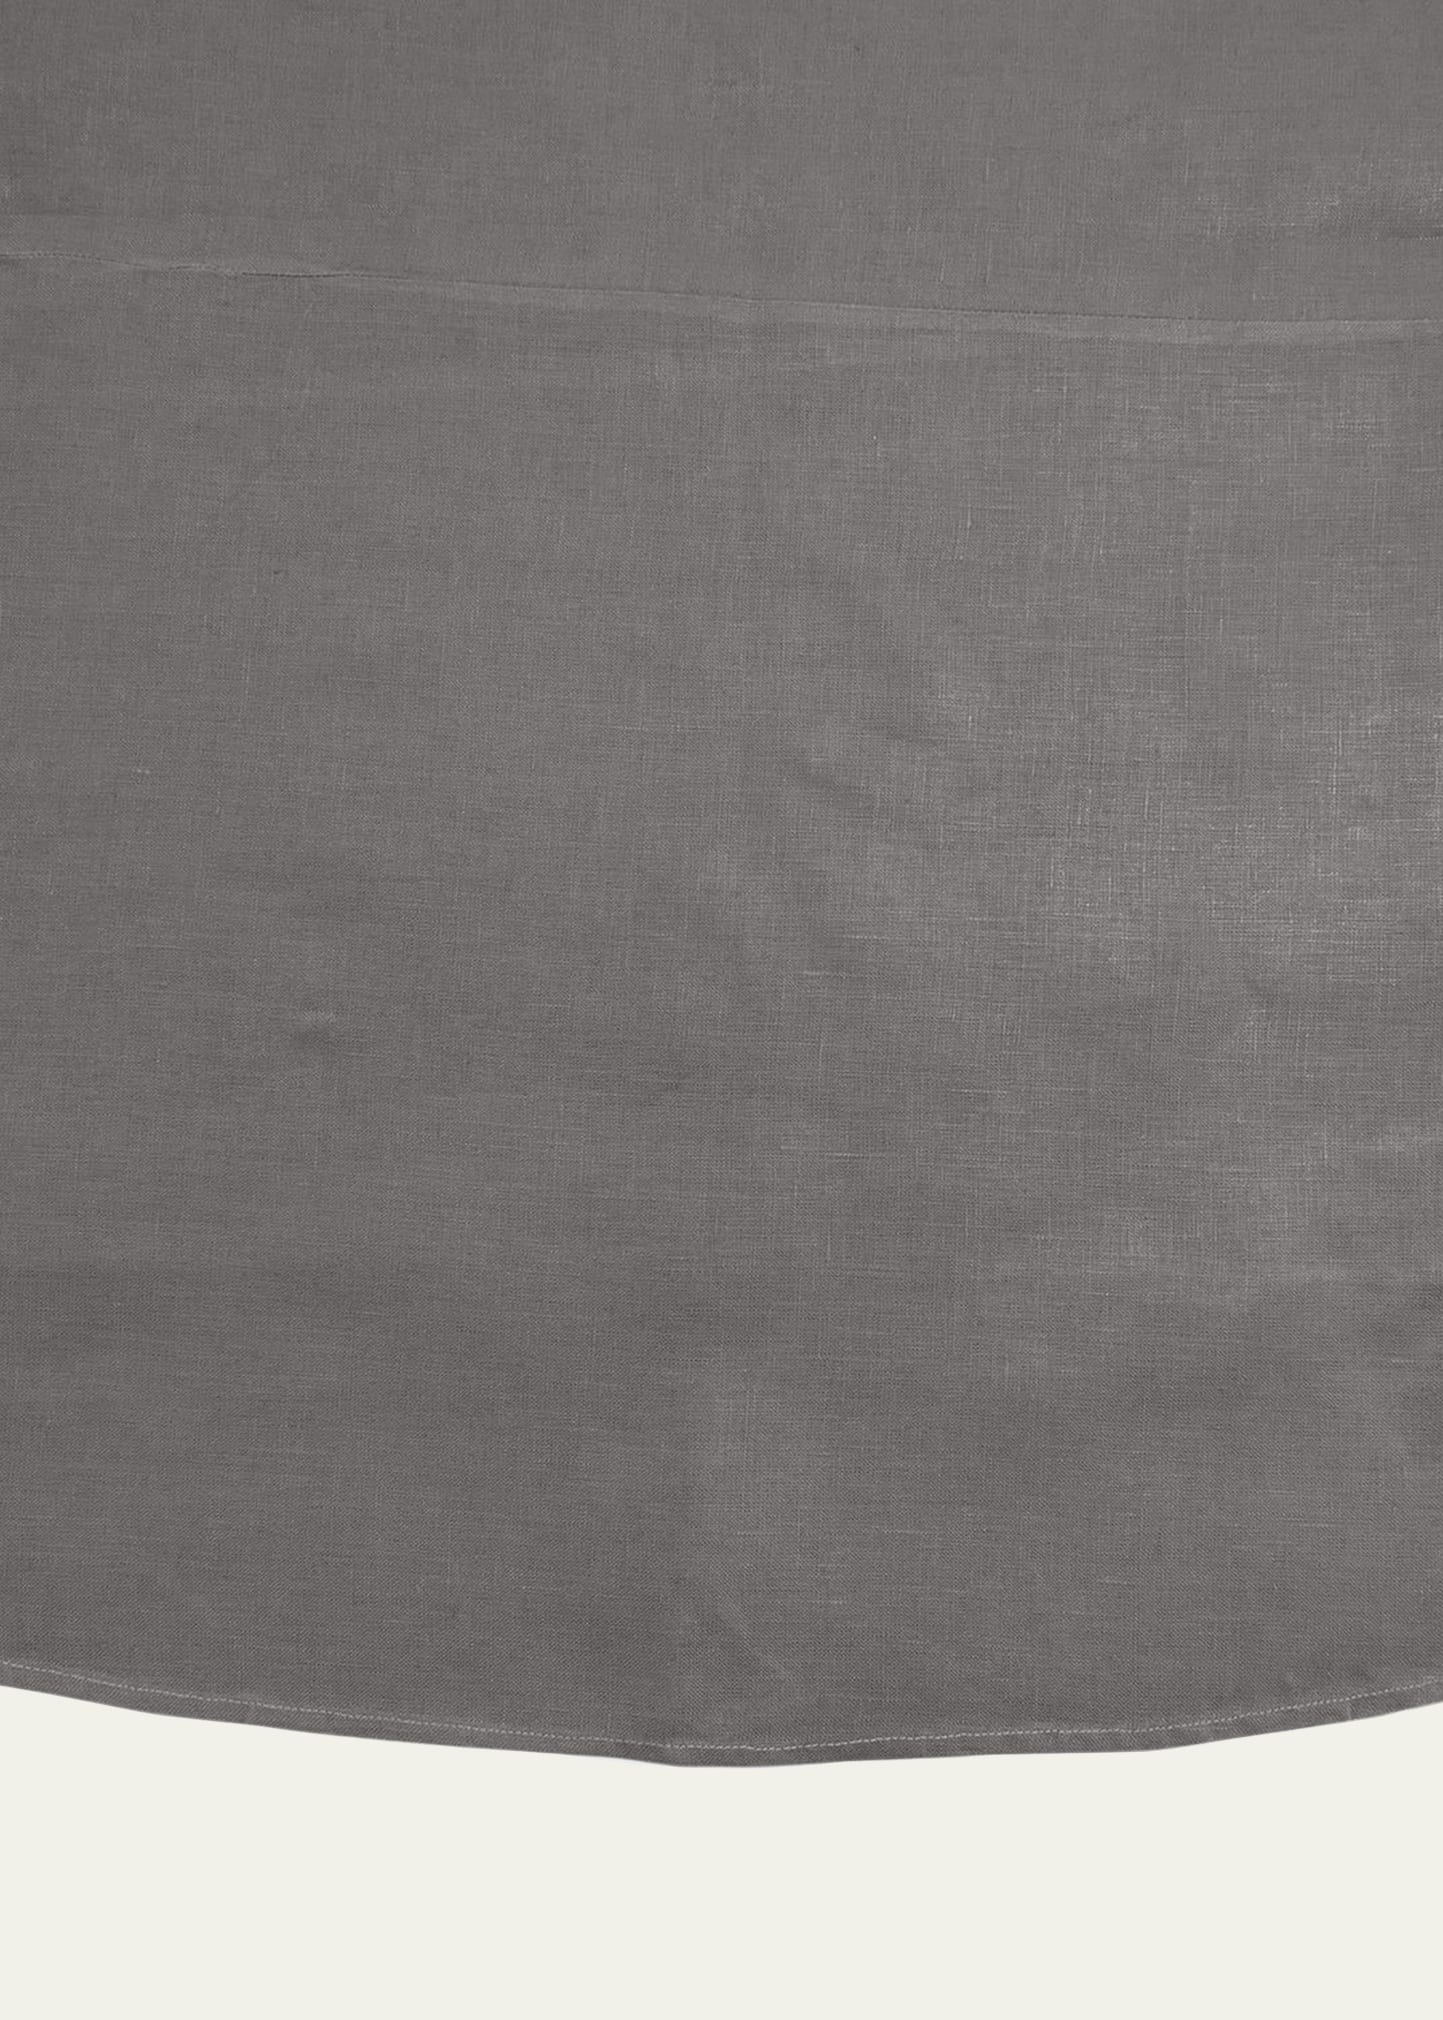 Hemstitch Round Tablecloth, 90"Dia.